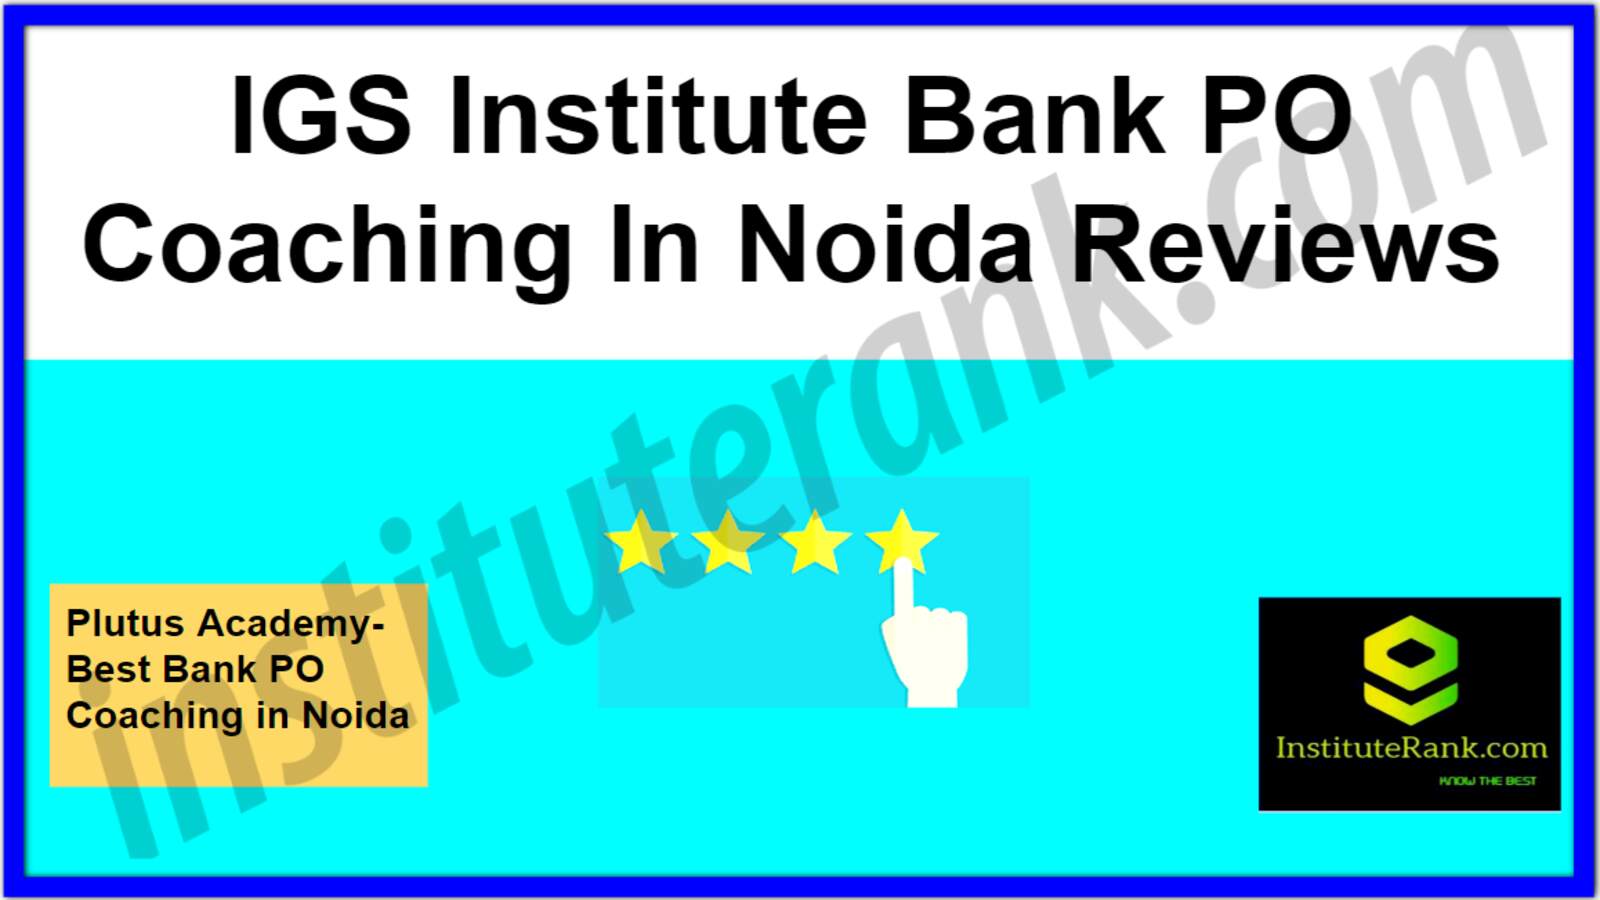 IGS Institute Bank PO Coaching in Noida Reviews